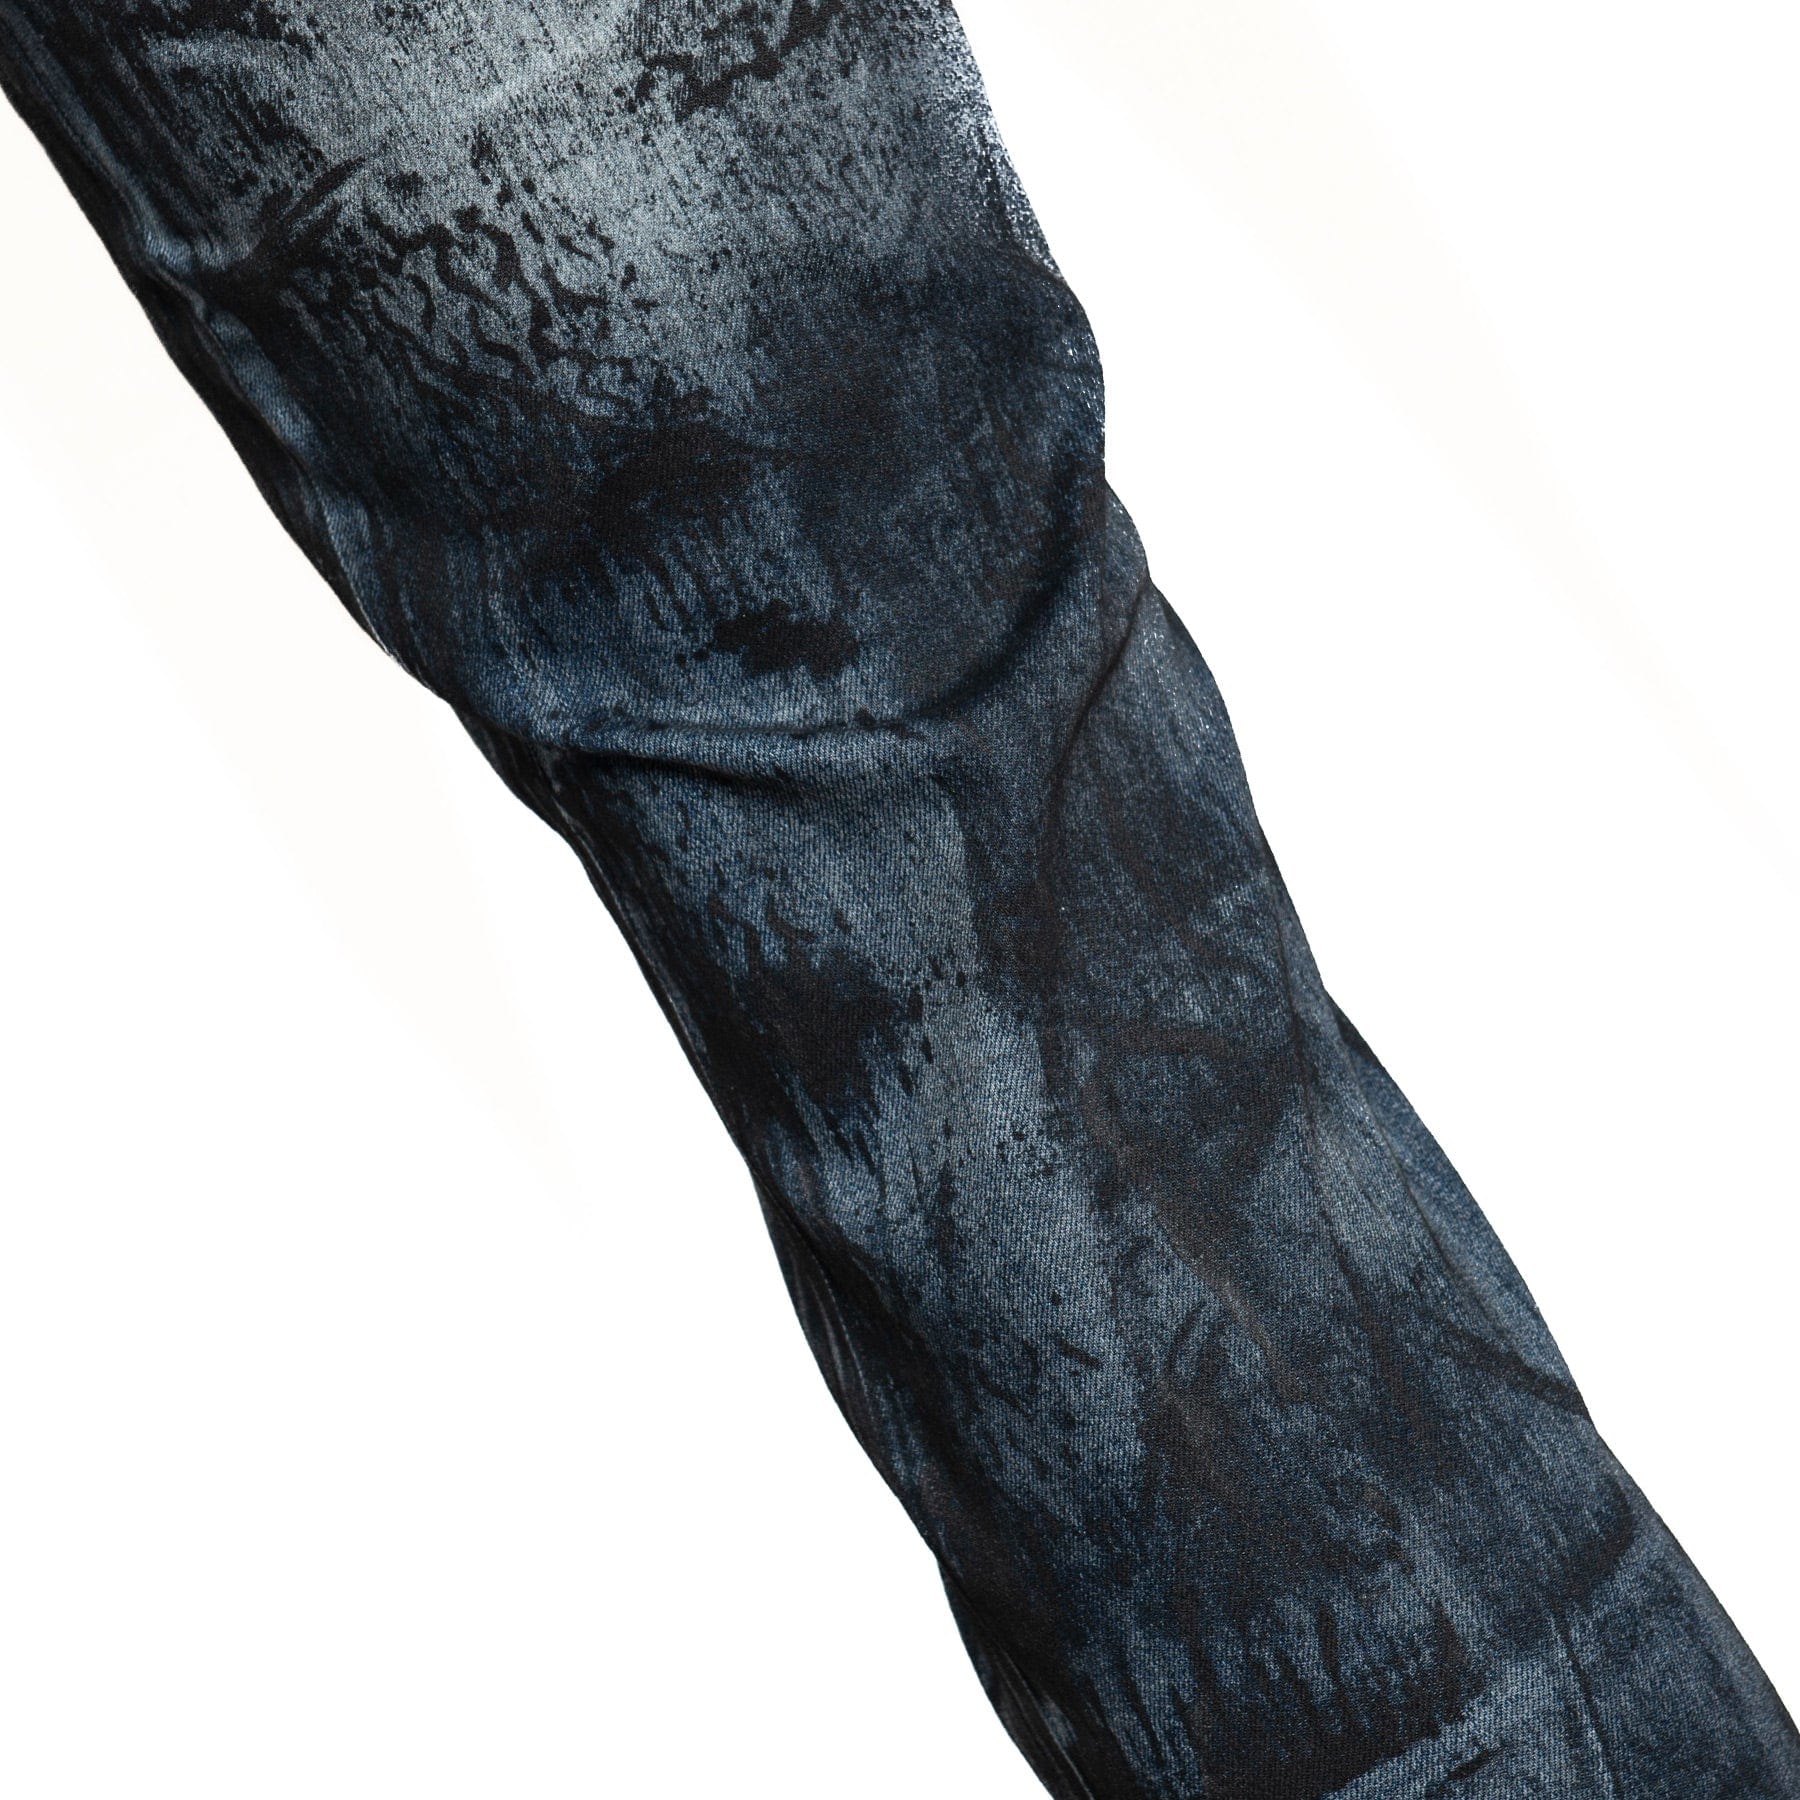 Custom Chop Shop Pants Wornstar Custom Jeans - Black Onyx Alloy Wash